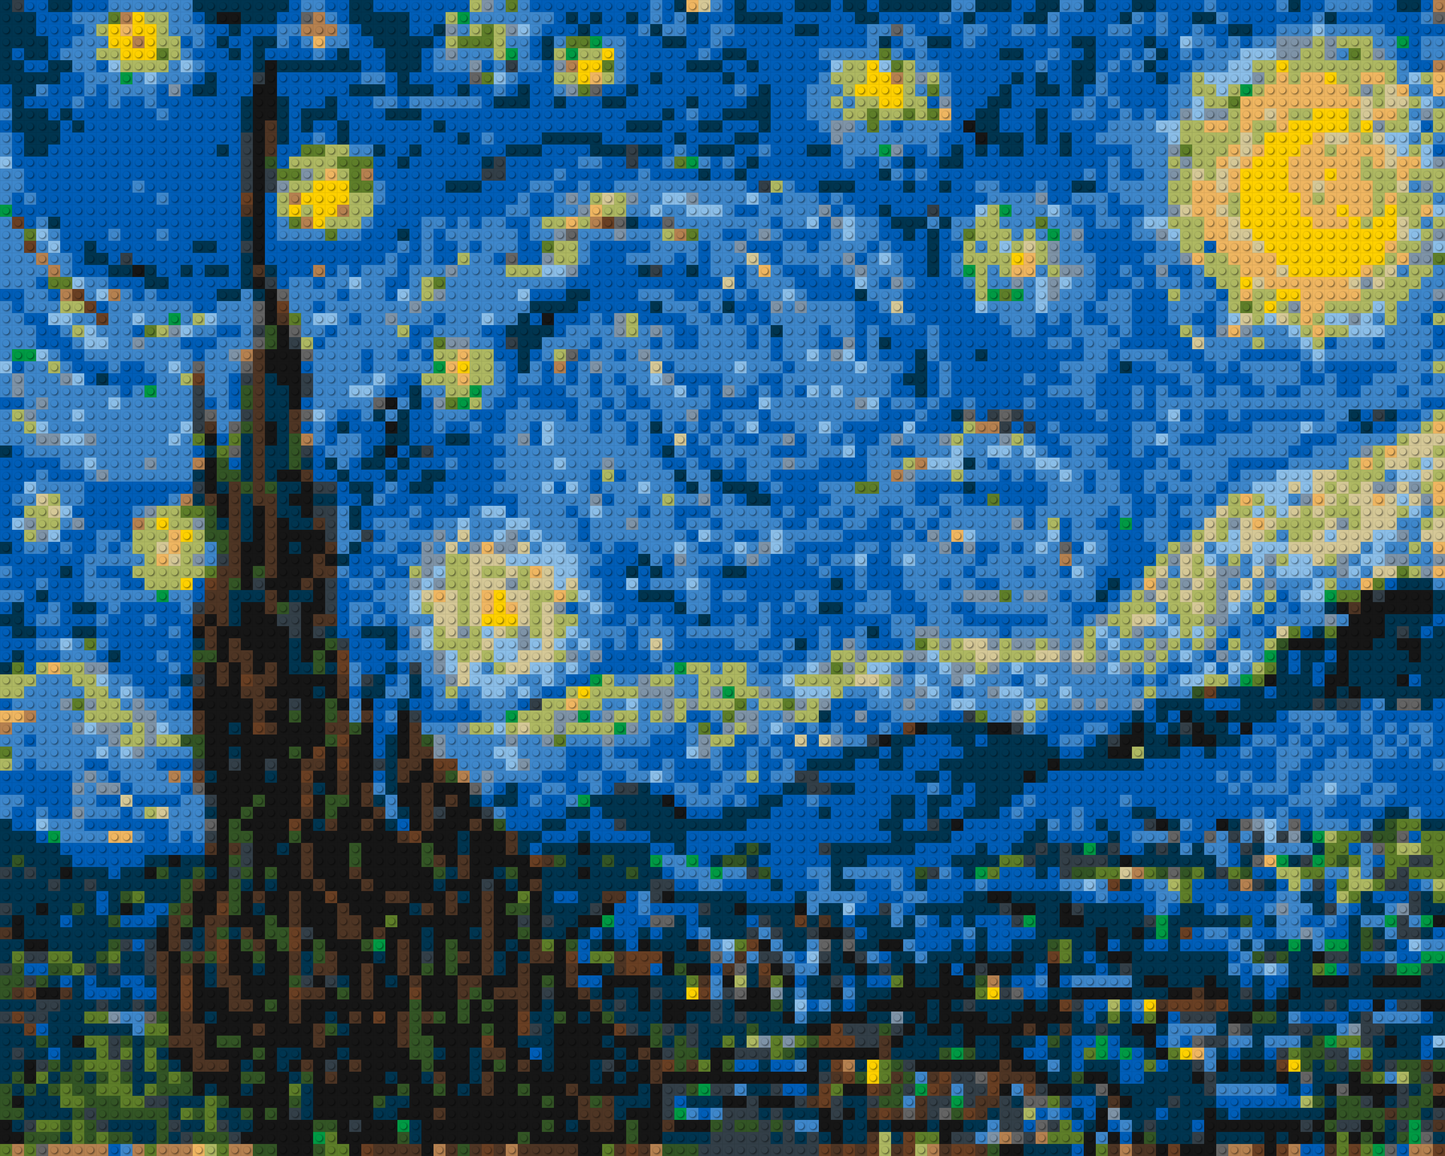 Starry Night by Vincent Van Gogh - Brick Art Mosaic Kit